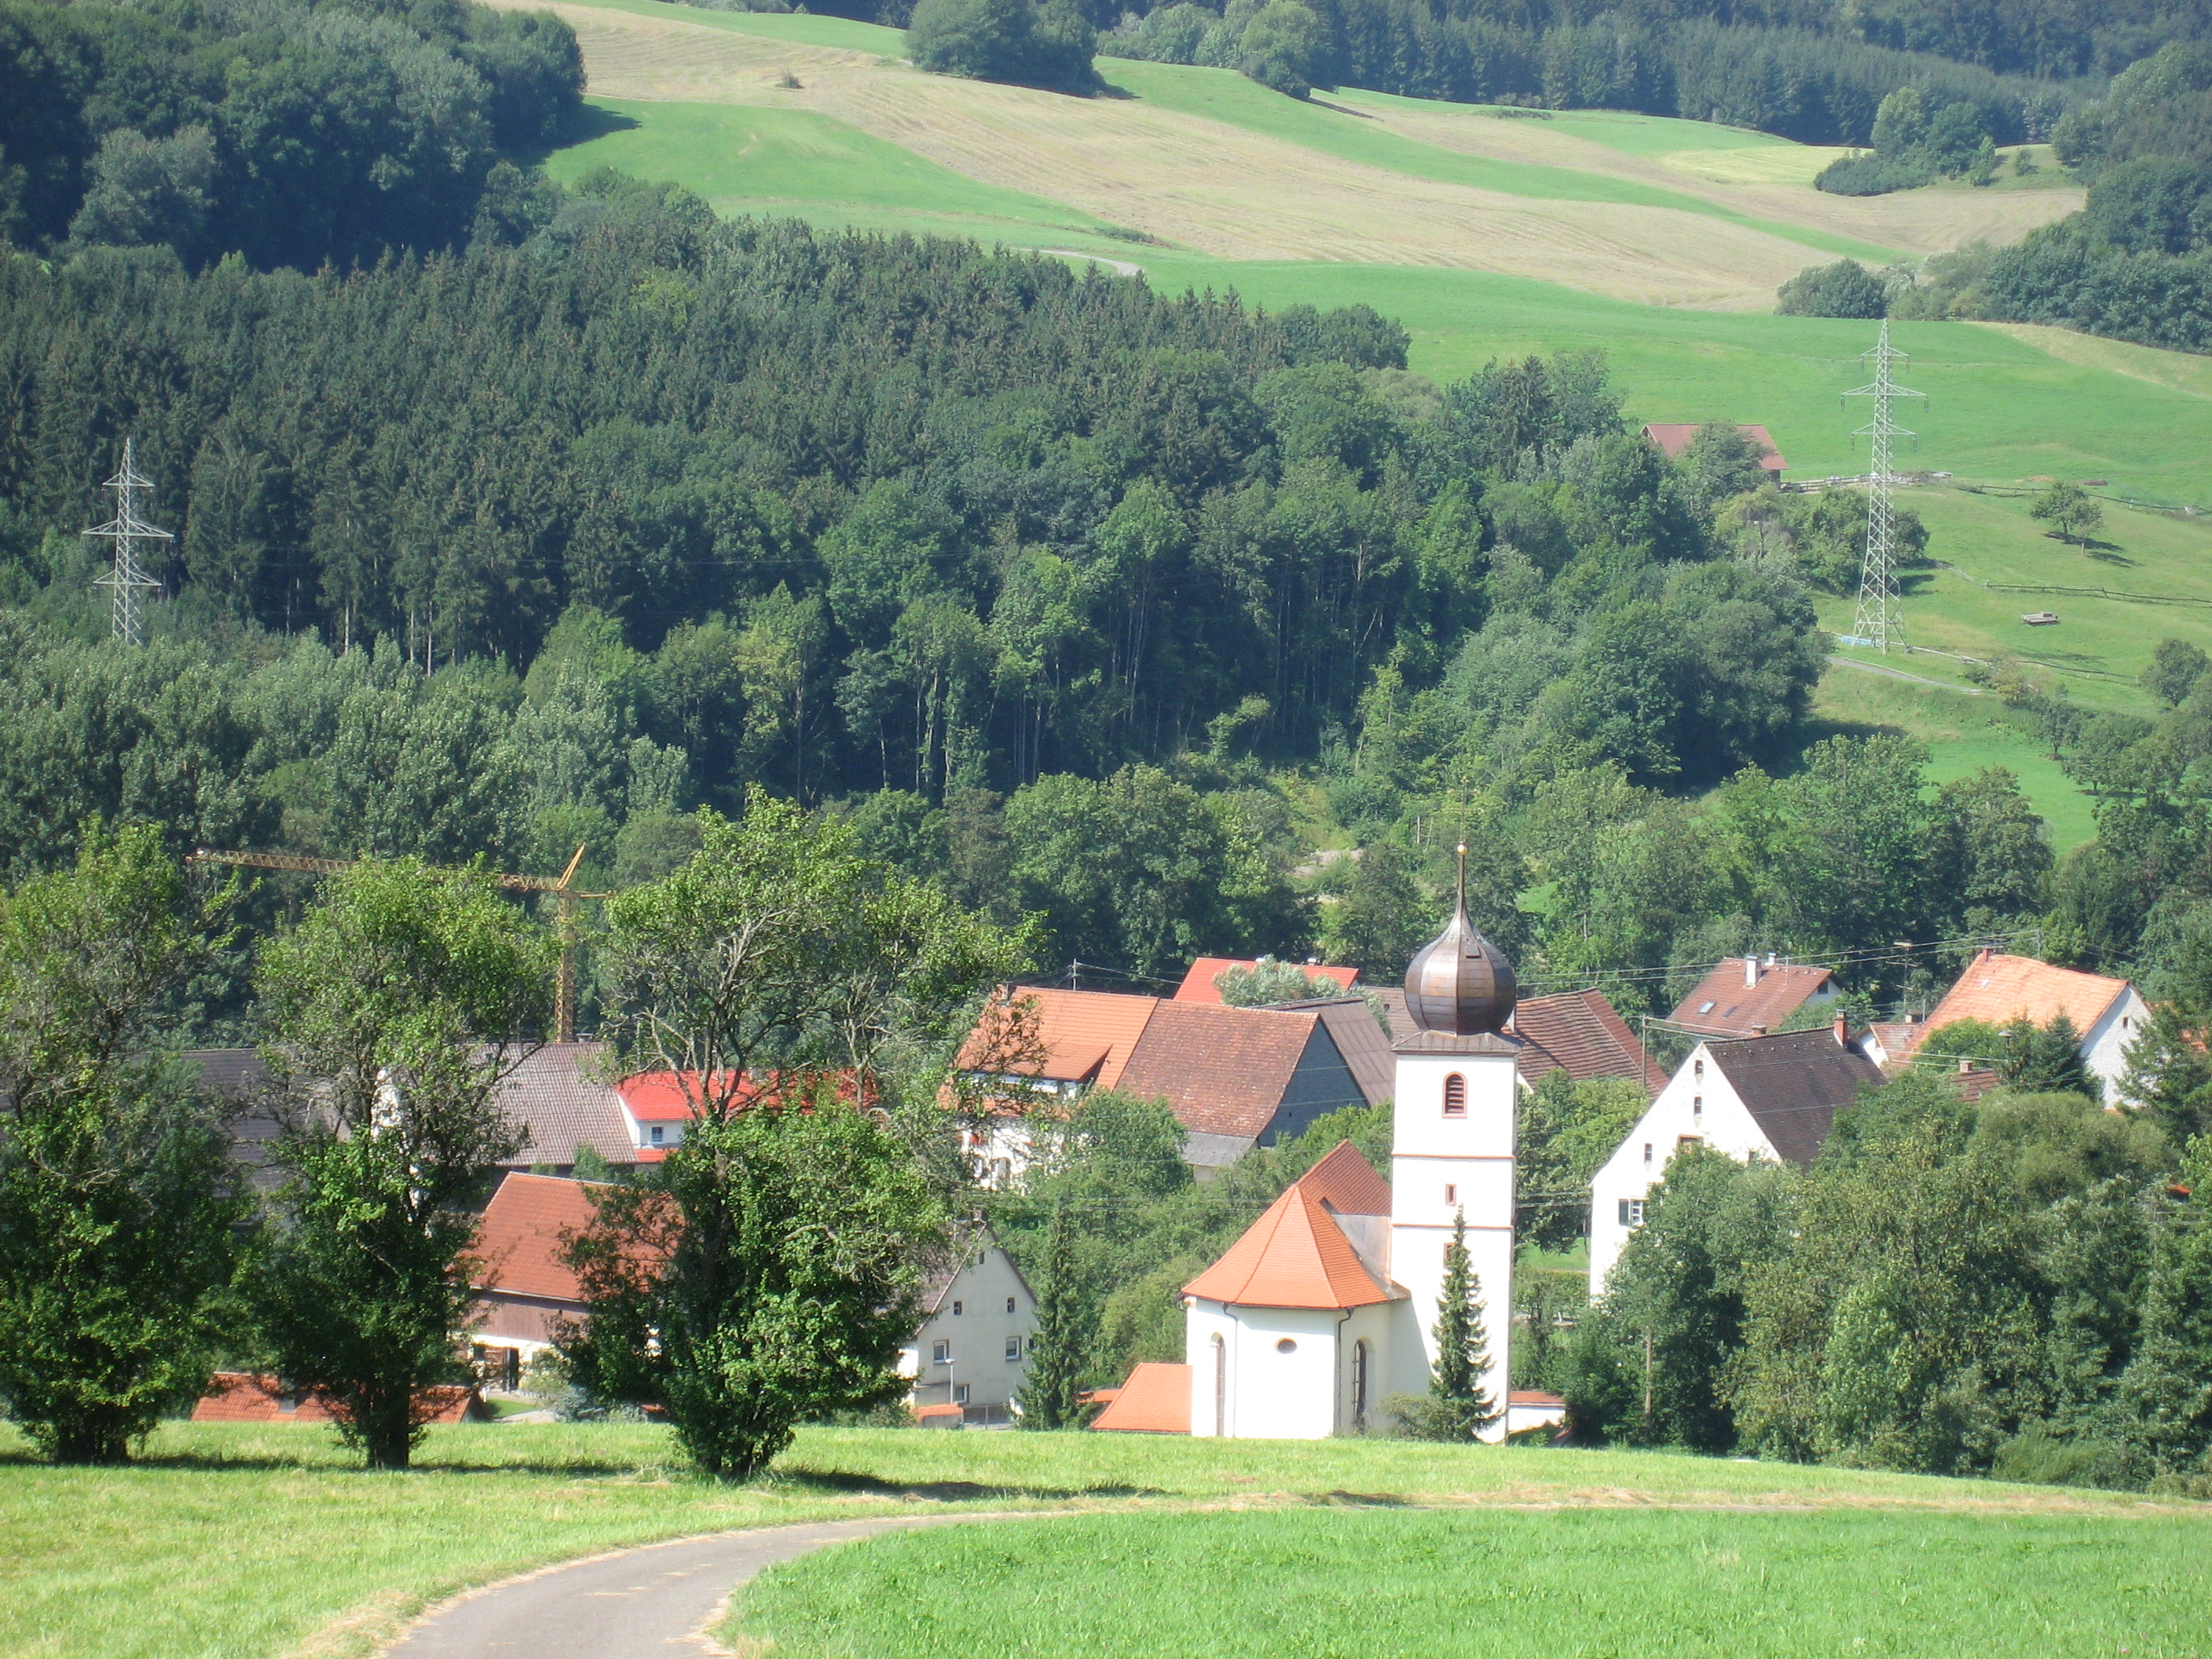 File:View over Achdorf in Blumberg.jpg - Wikimedia Commons